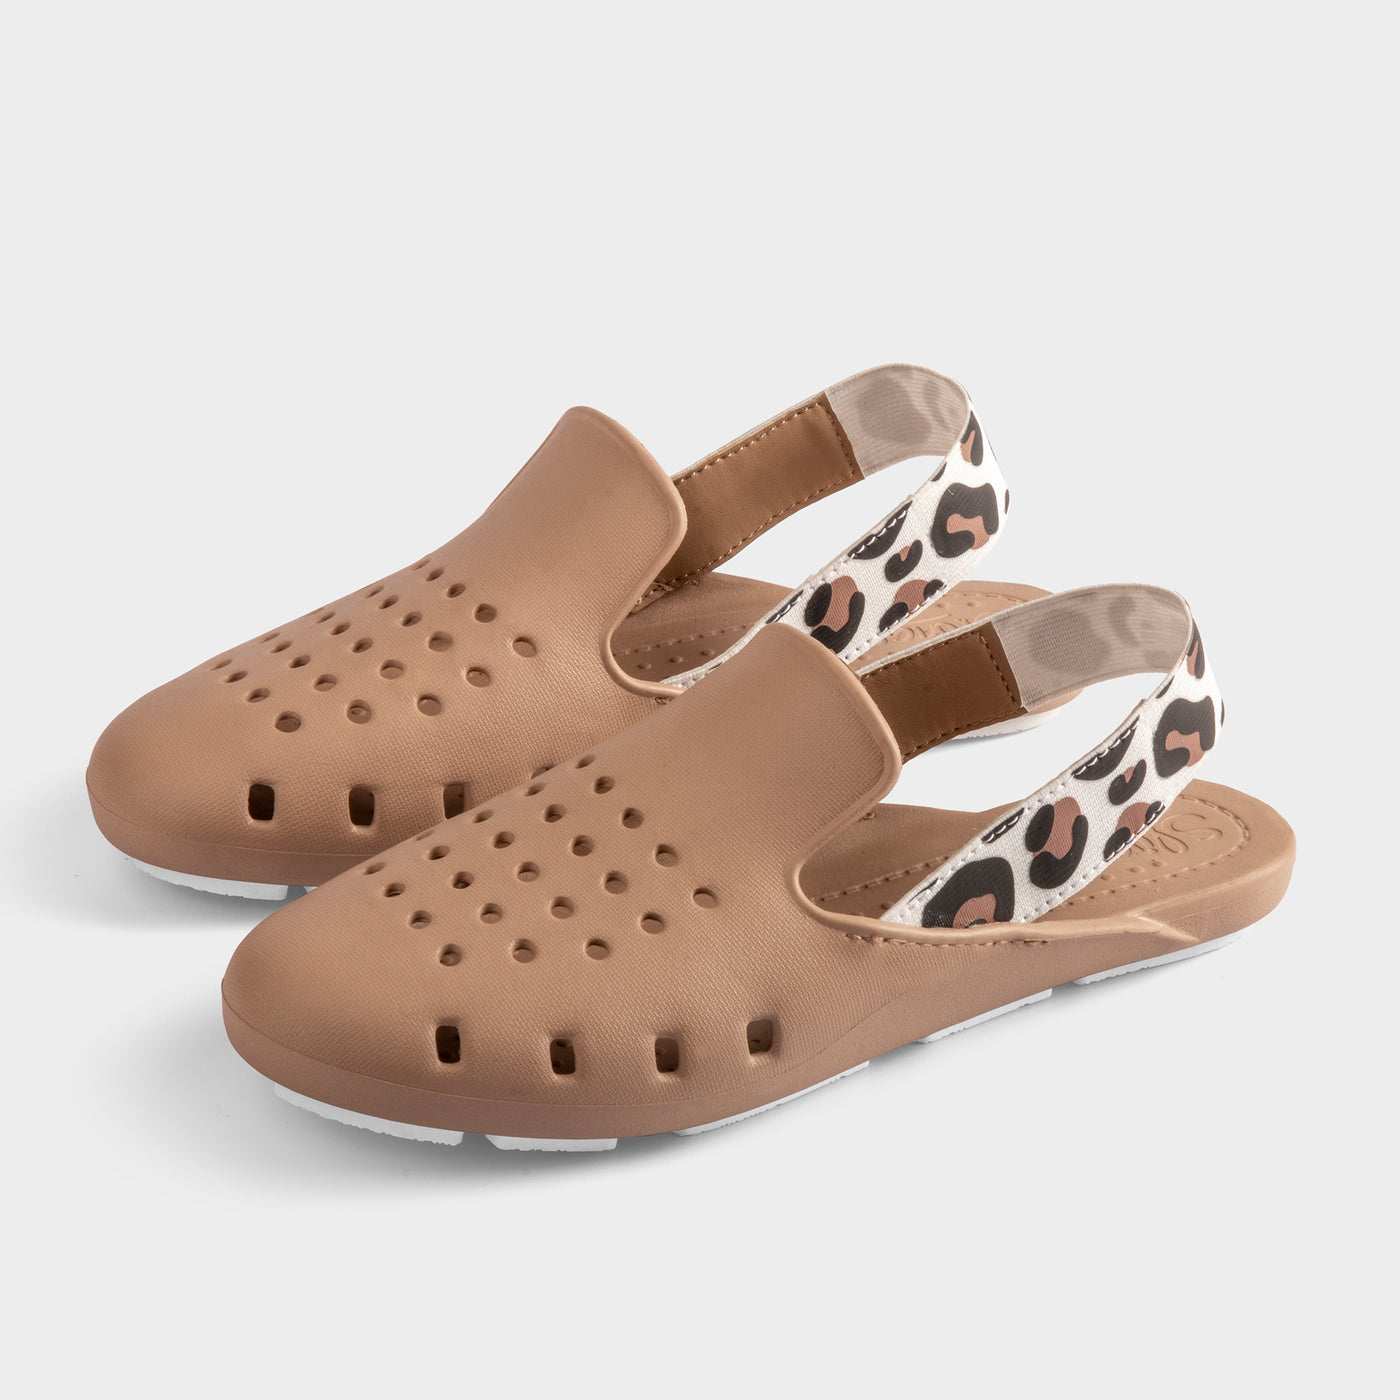 Girls water friendly tan pool slipper with elastic back strap in tan leopard